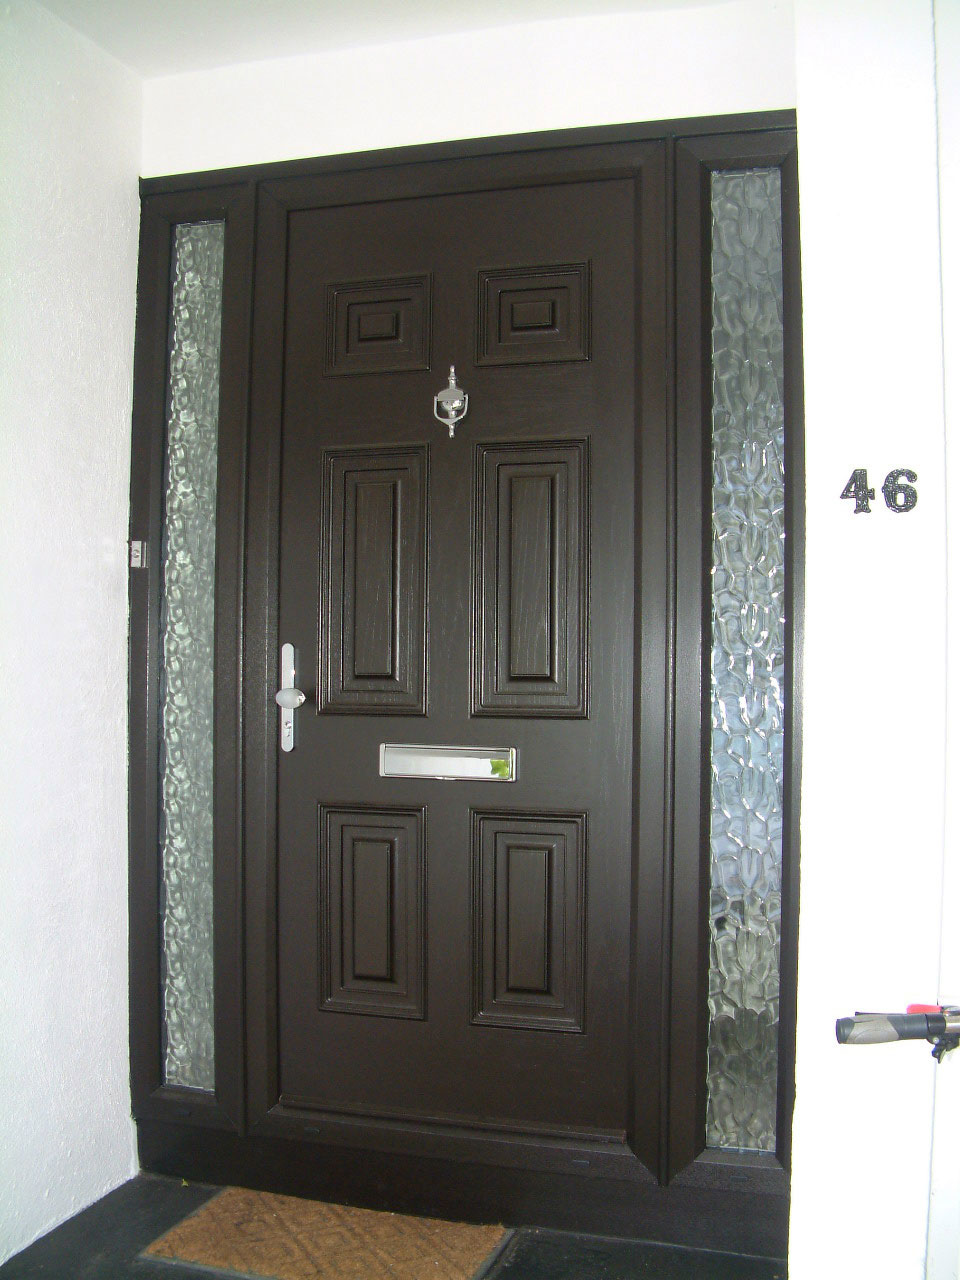 BLACK PALLADIO GEORGIAN DOOR FITTED BY ASGARD WINDOWS IN GREYSTONES.